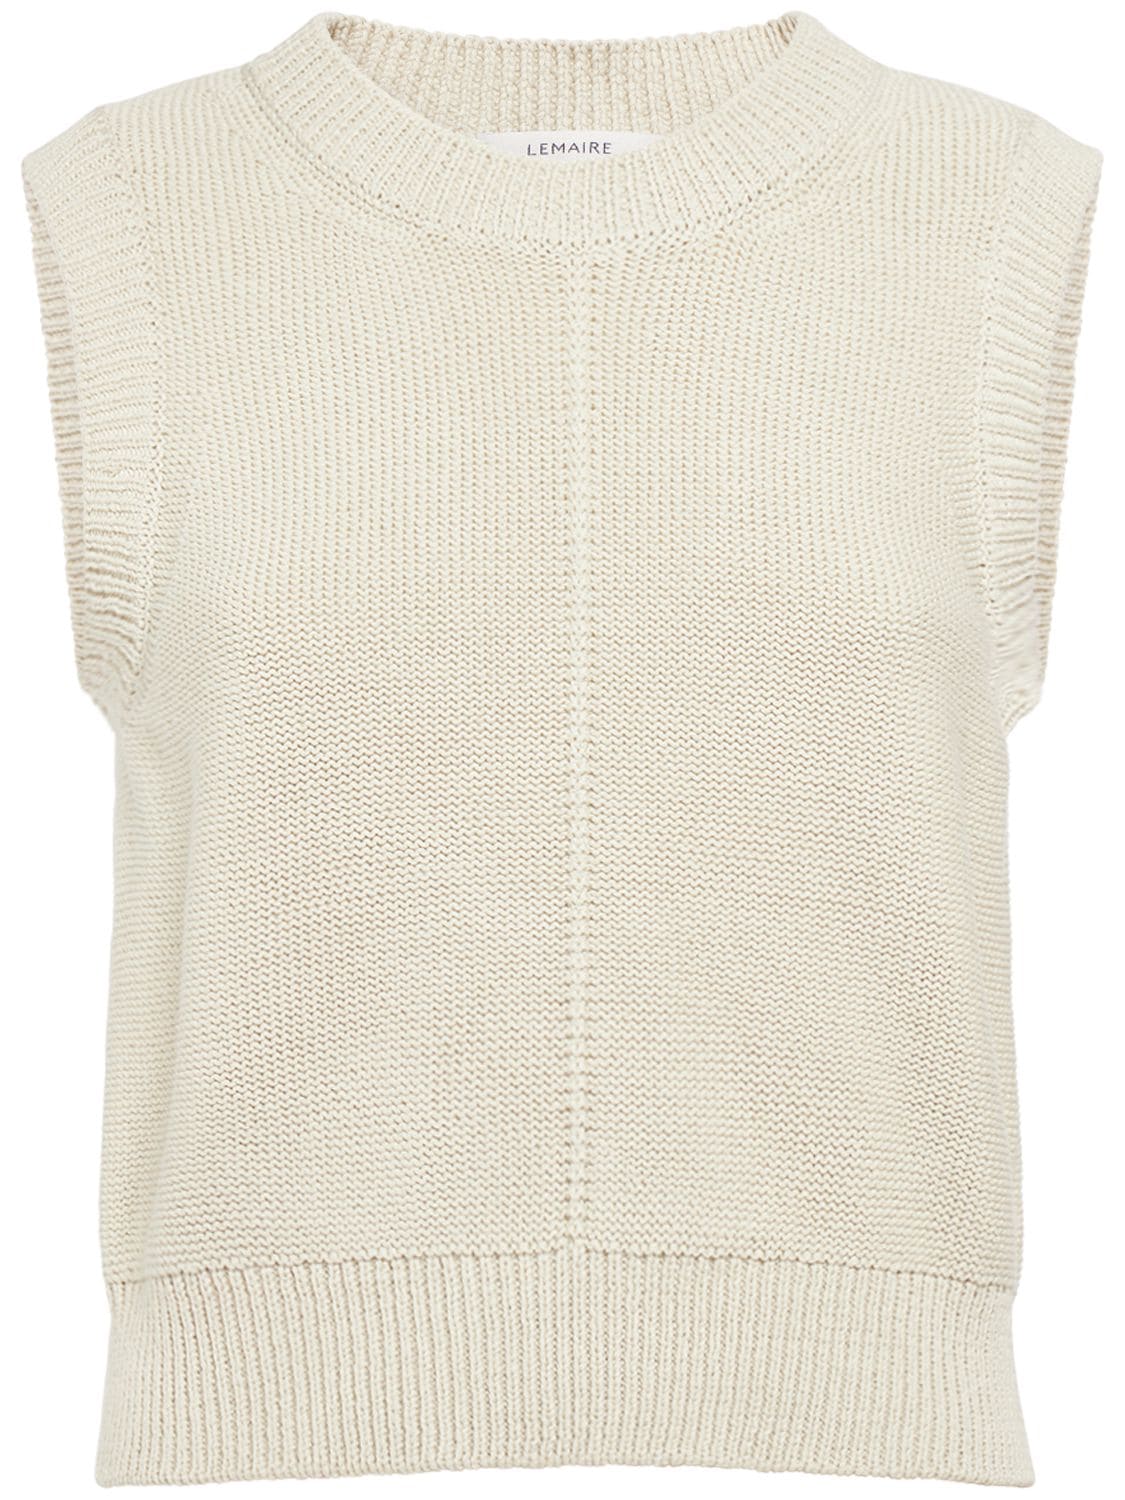 Image of Sleeveless Cropped Cotton Knit Sweater